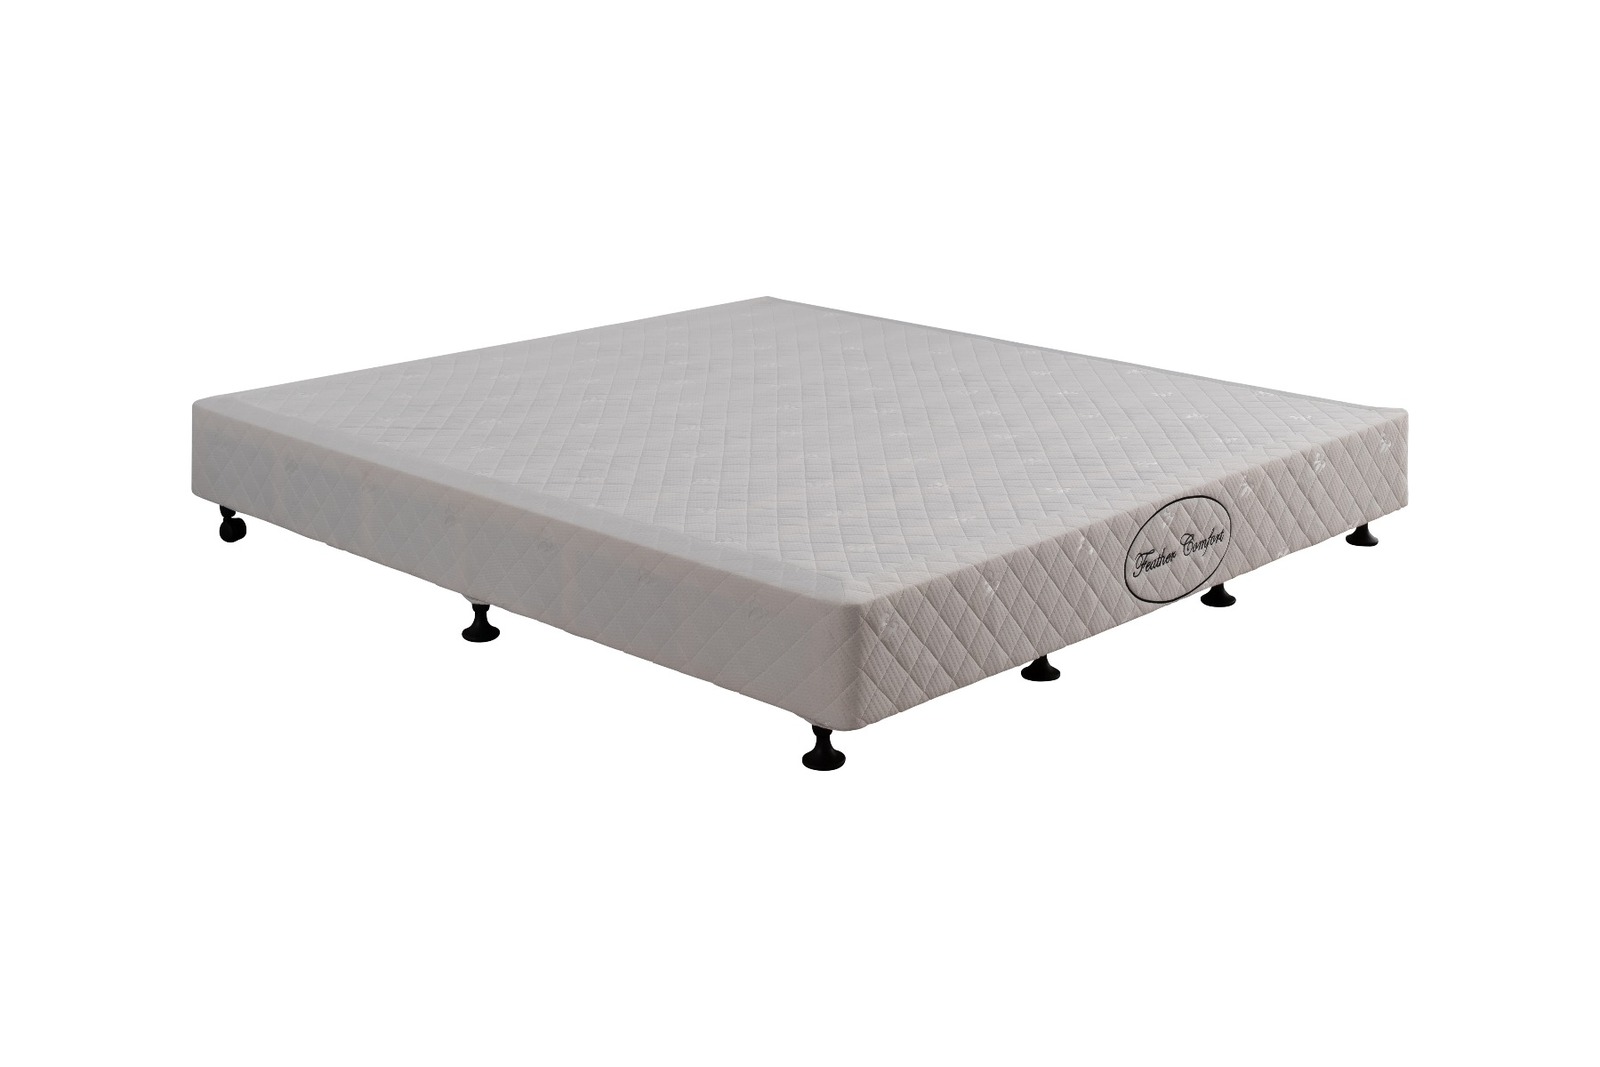 king size mattress and base price